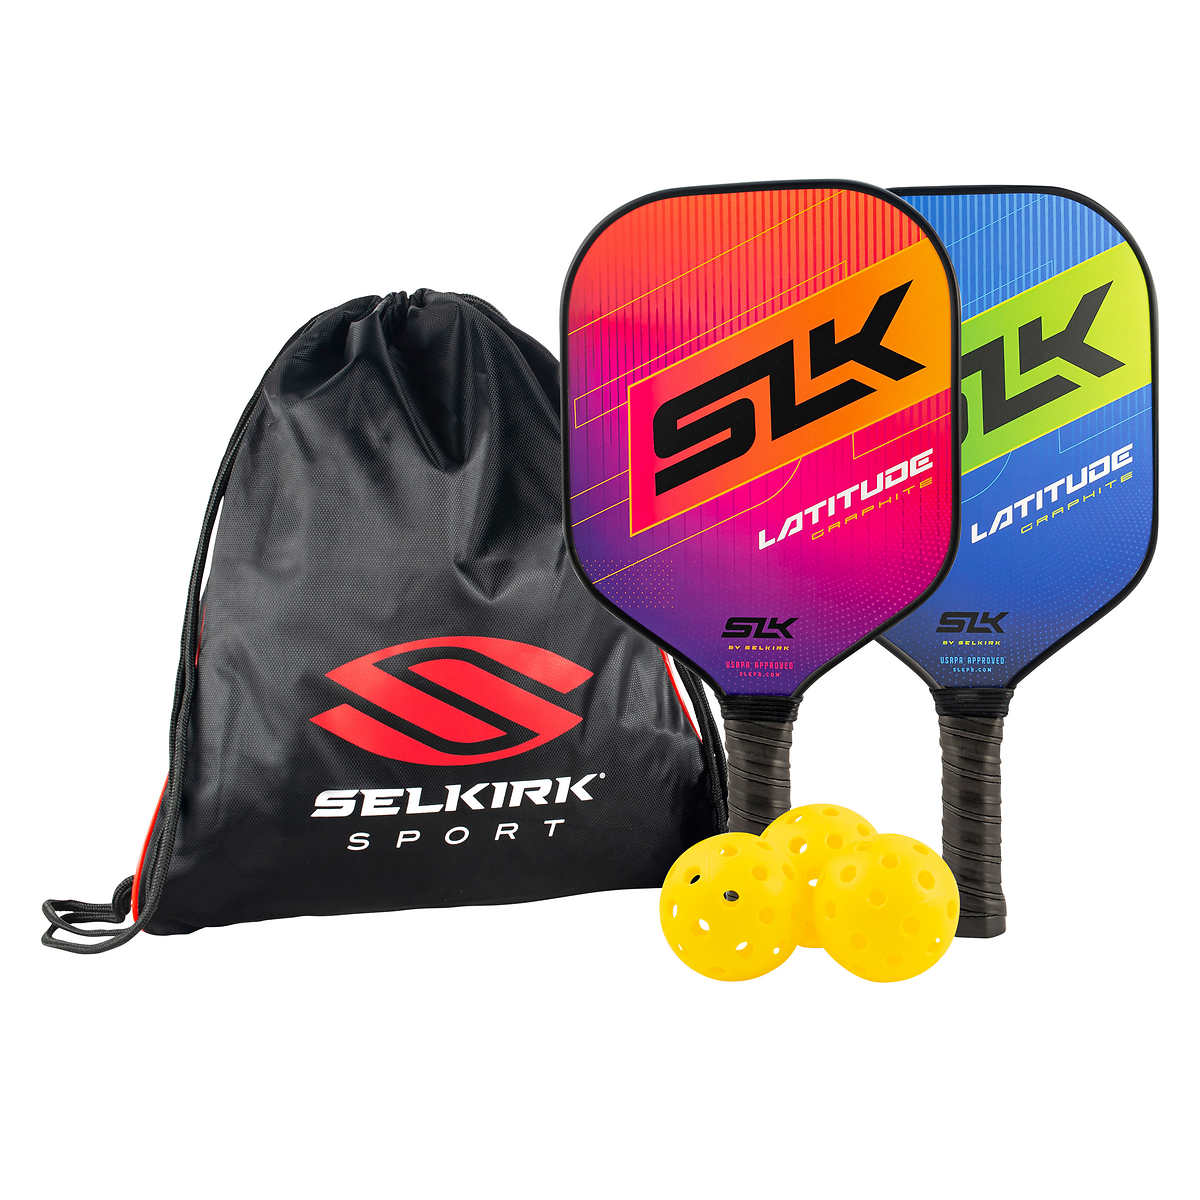 Selkirk SLK Latitude Pickleball Bundle- 2 Paddles, 3 Balls, and 1 Bag (New) 